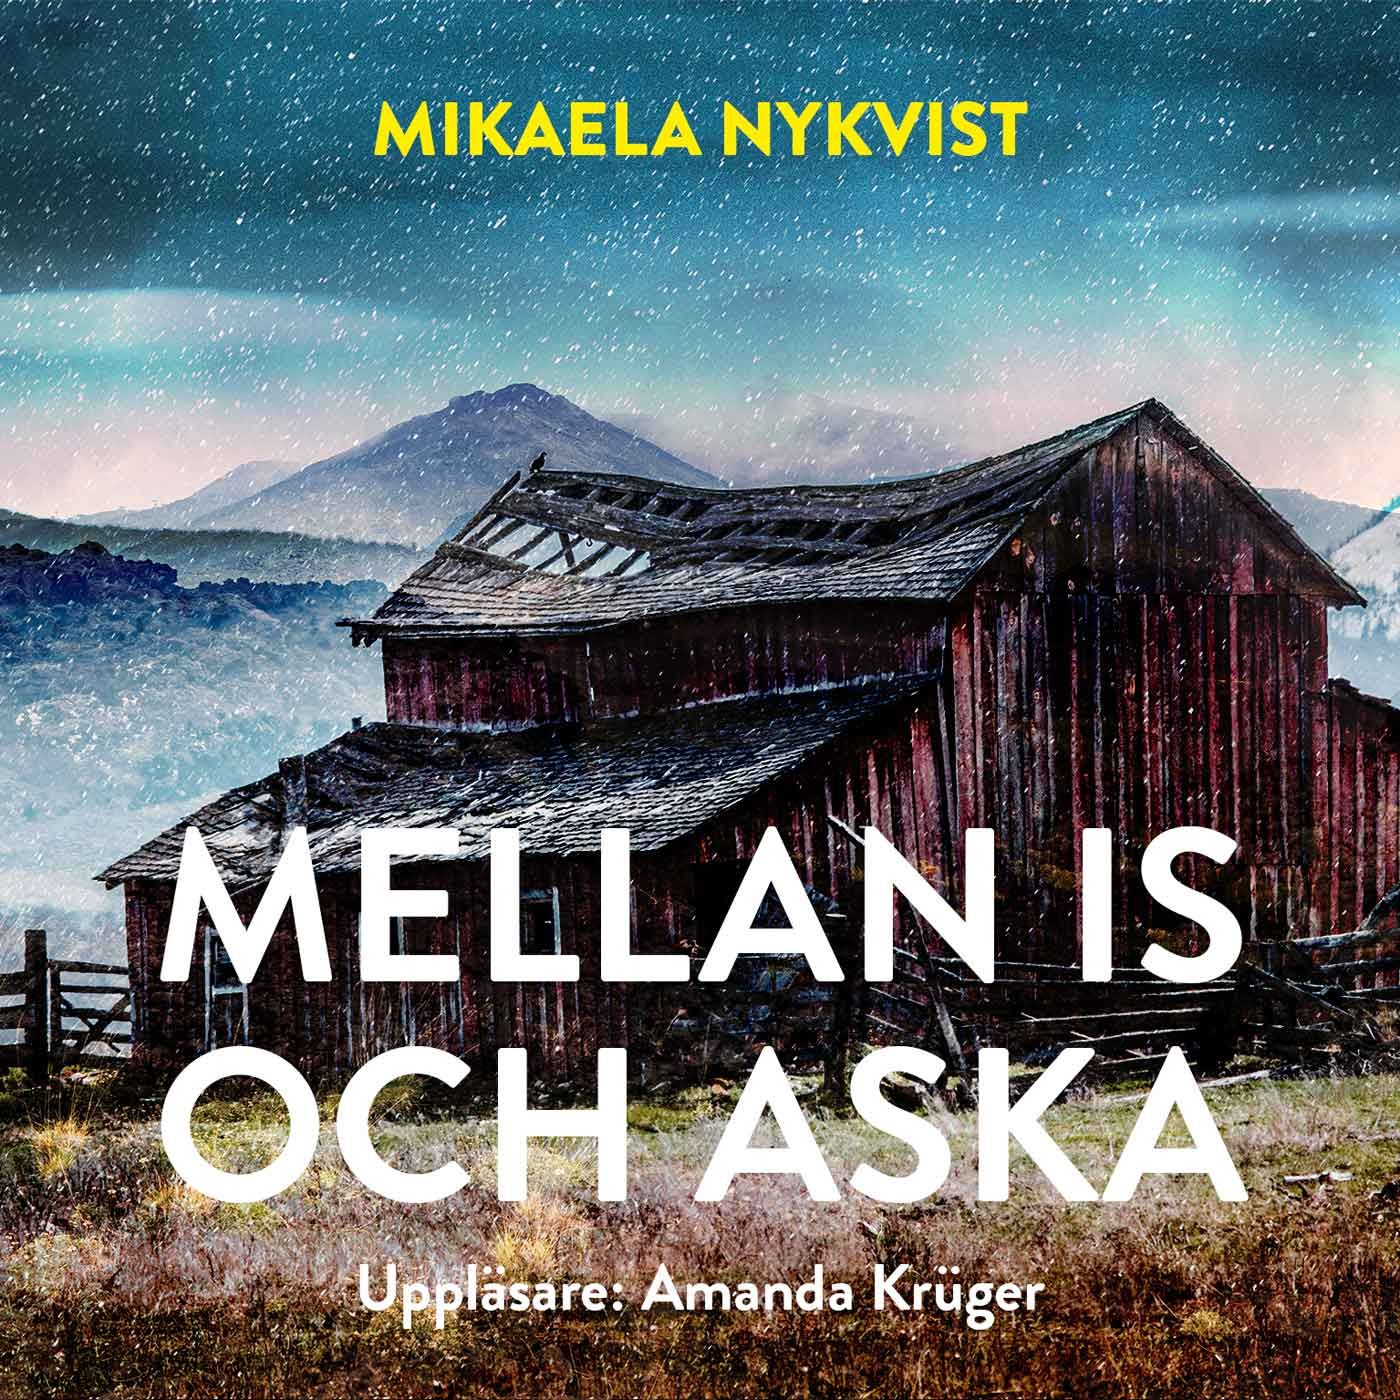 Mellan is och aska, e-bog af Mikaela Nykvist